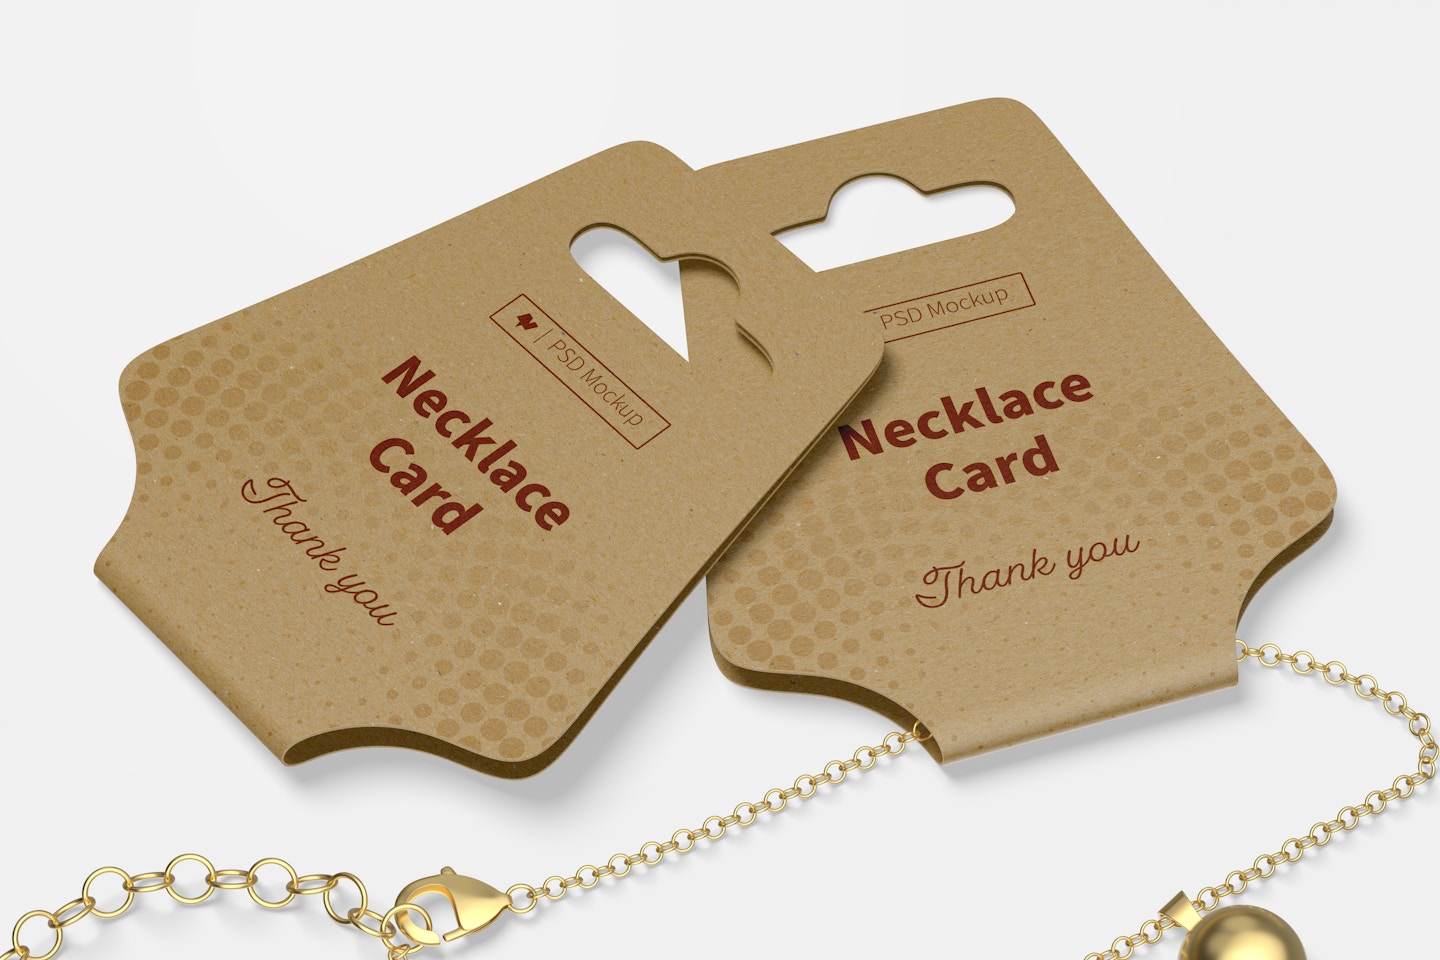 Necklace Cards Mockup